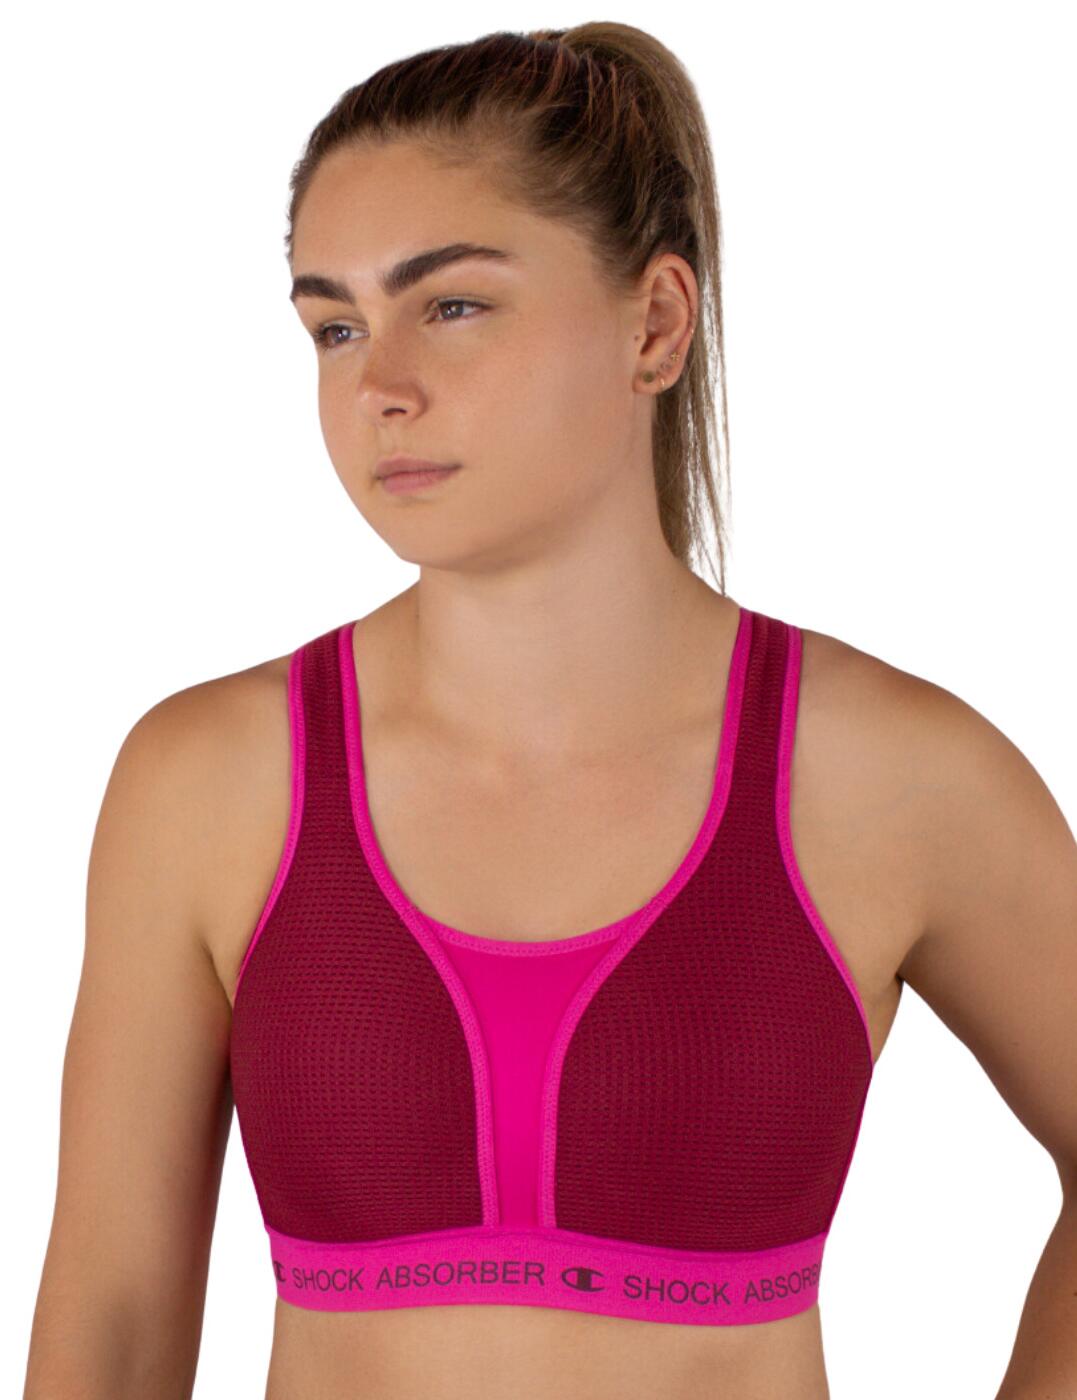 Comfortable sports bra padding For High-Performance 